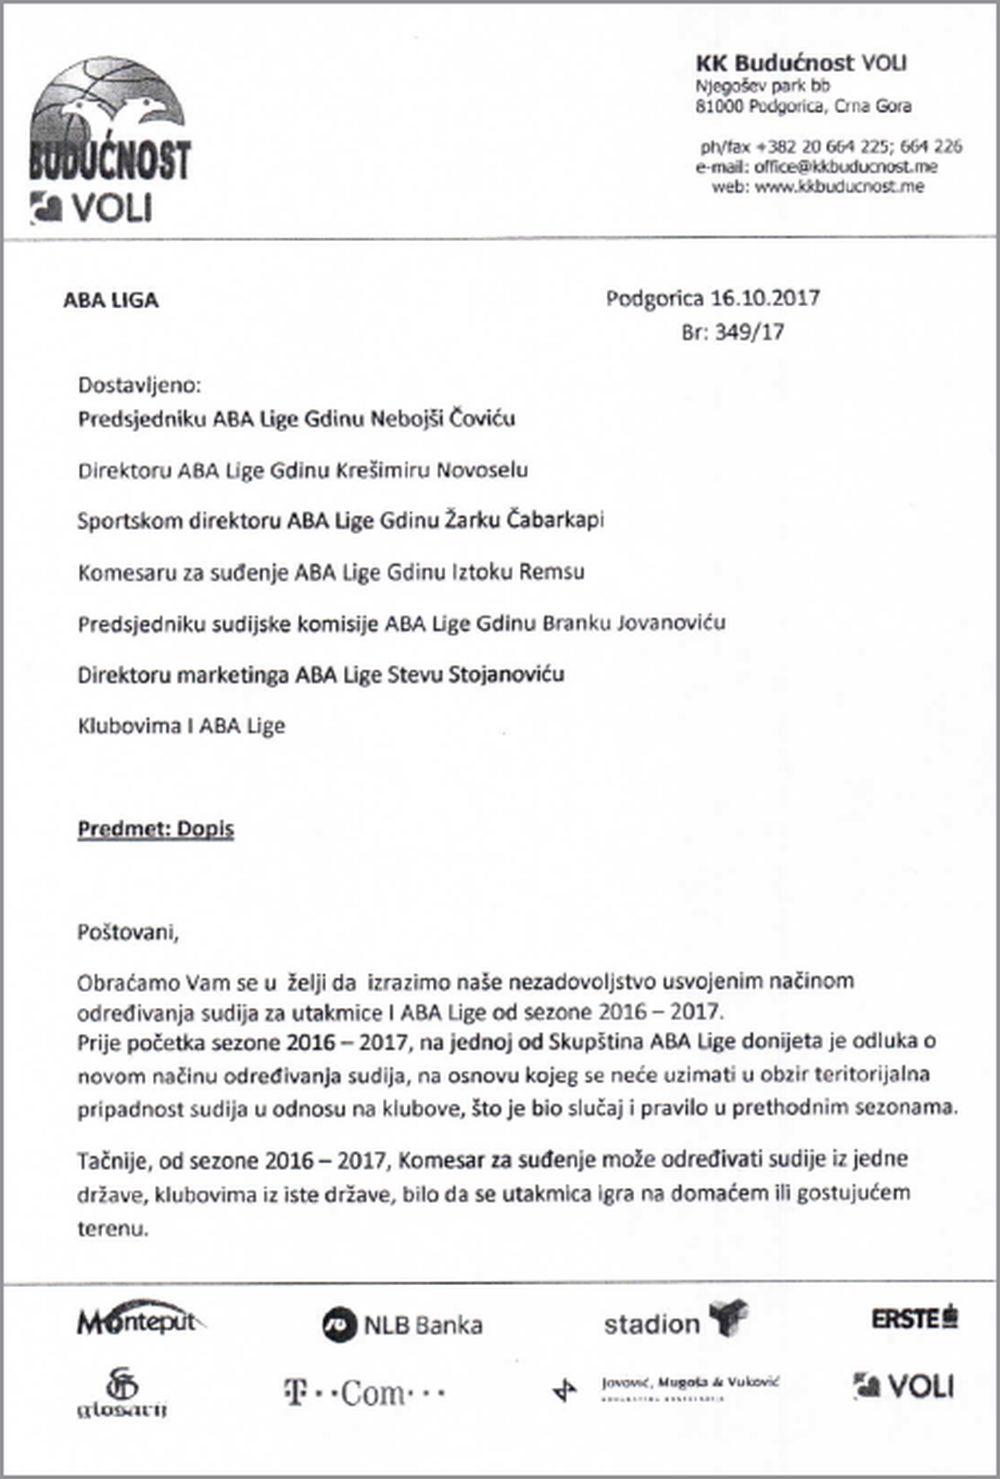 Dopis ABA ligi od strane Budućnosti